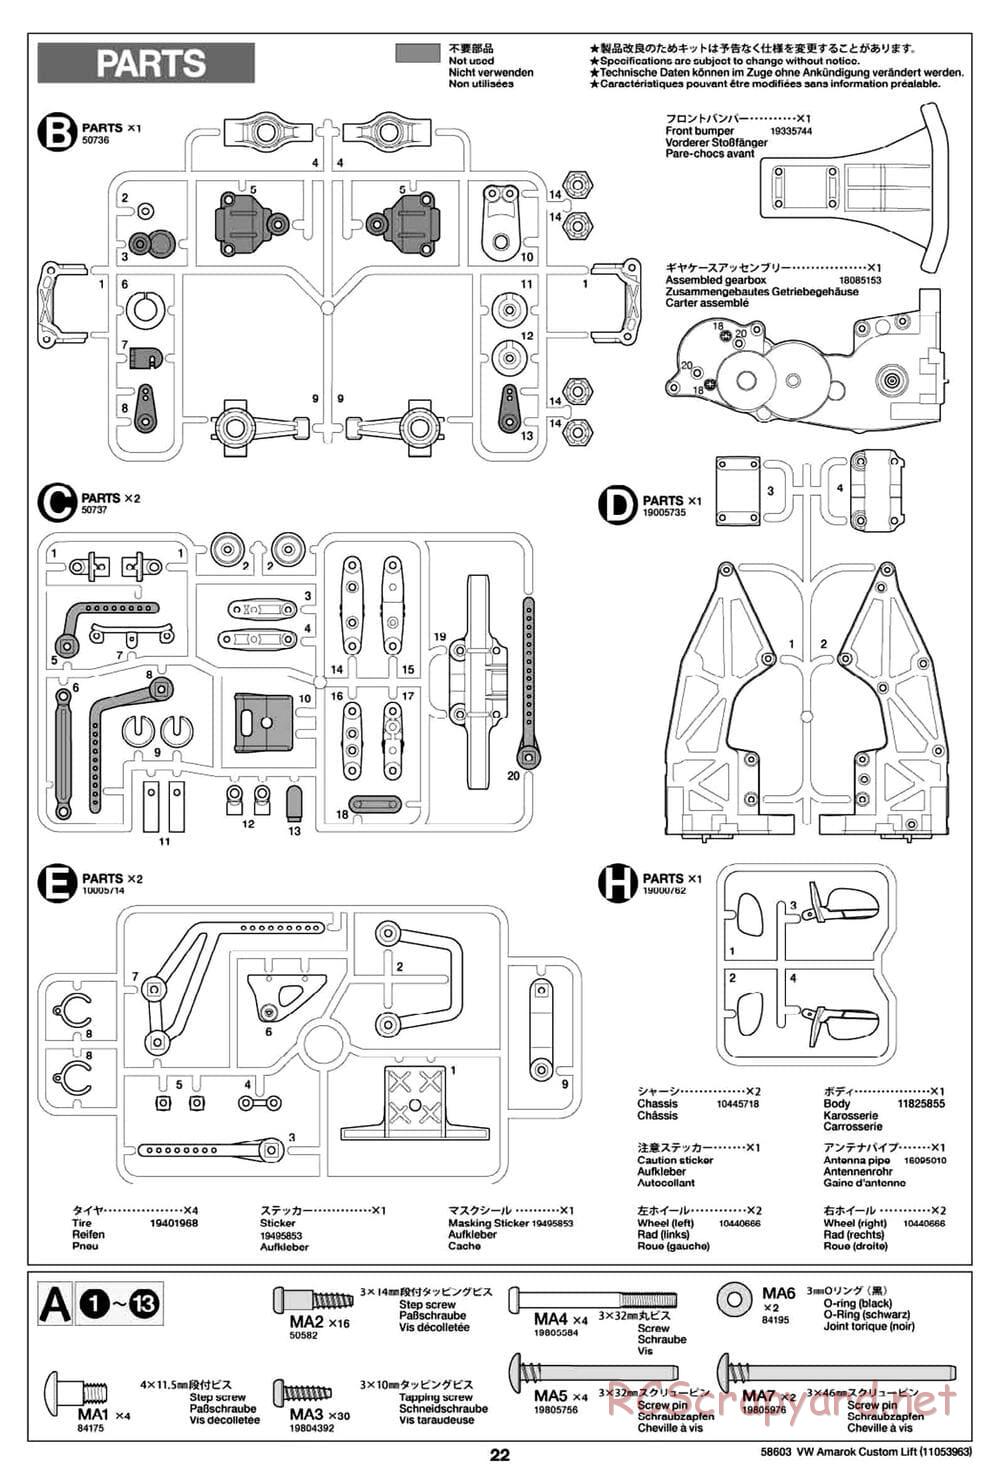 Tamiya - Volkswagen Amarok Custom Lift - WT-01N Chassis - Manual - Page 22